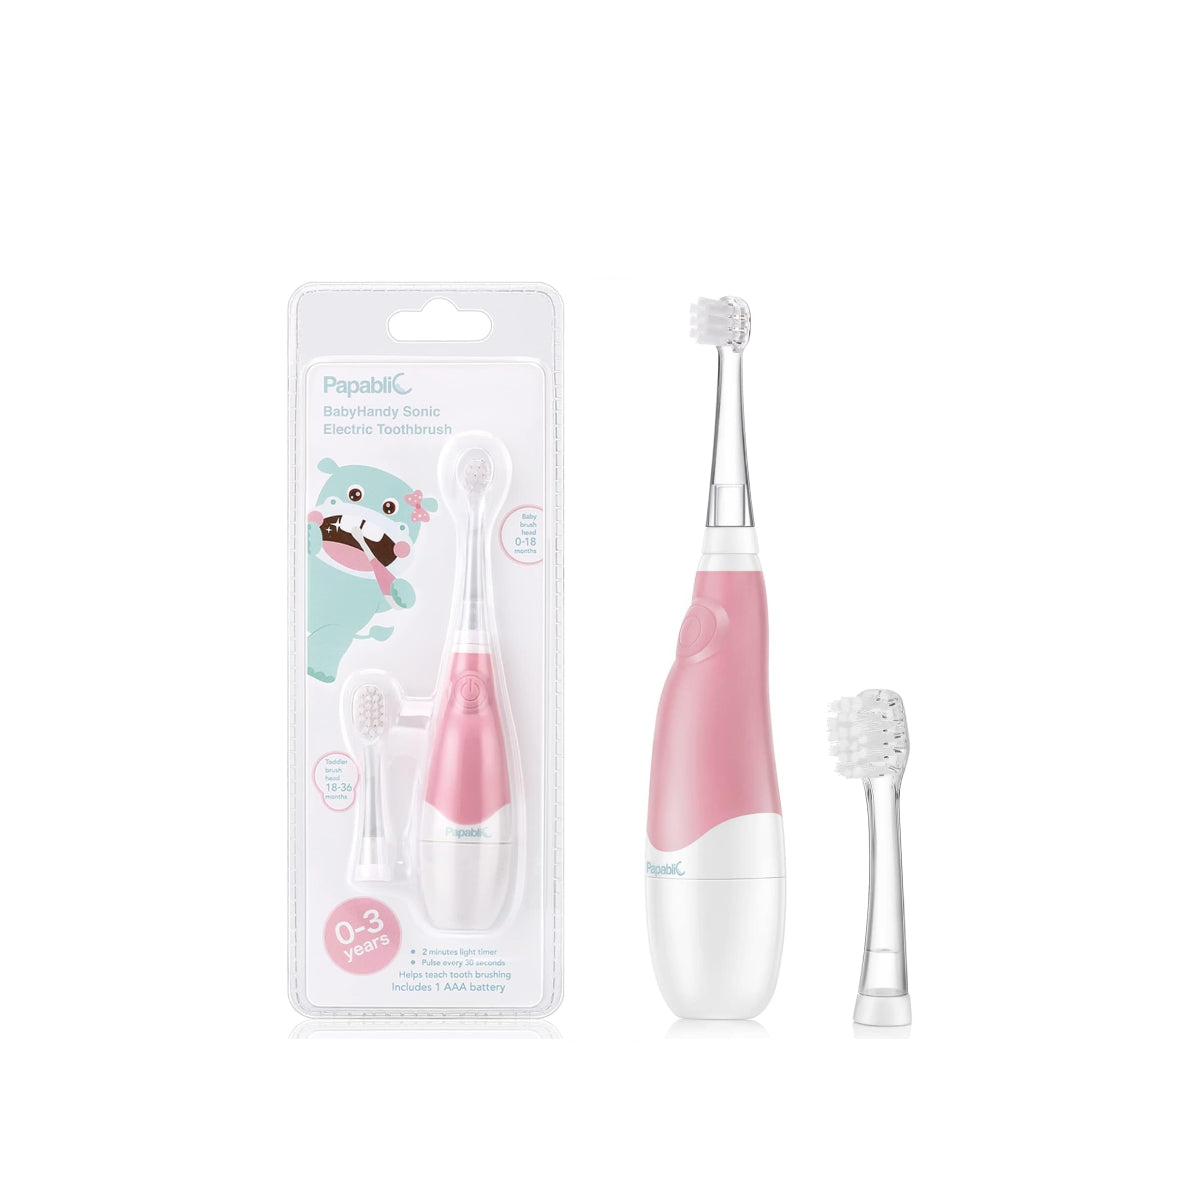 BabyHandy Sonic Electric Toothbrush - Pink